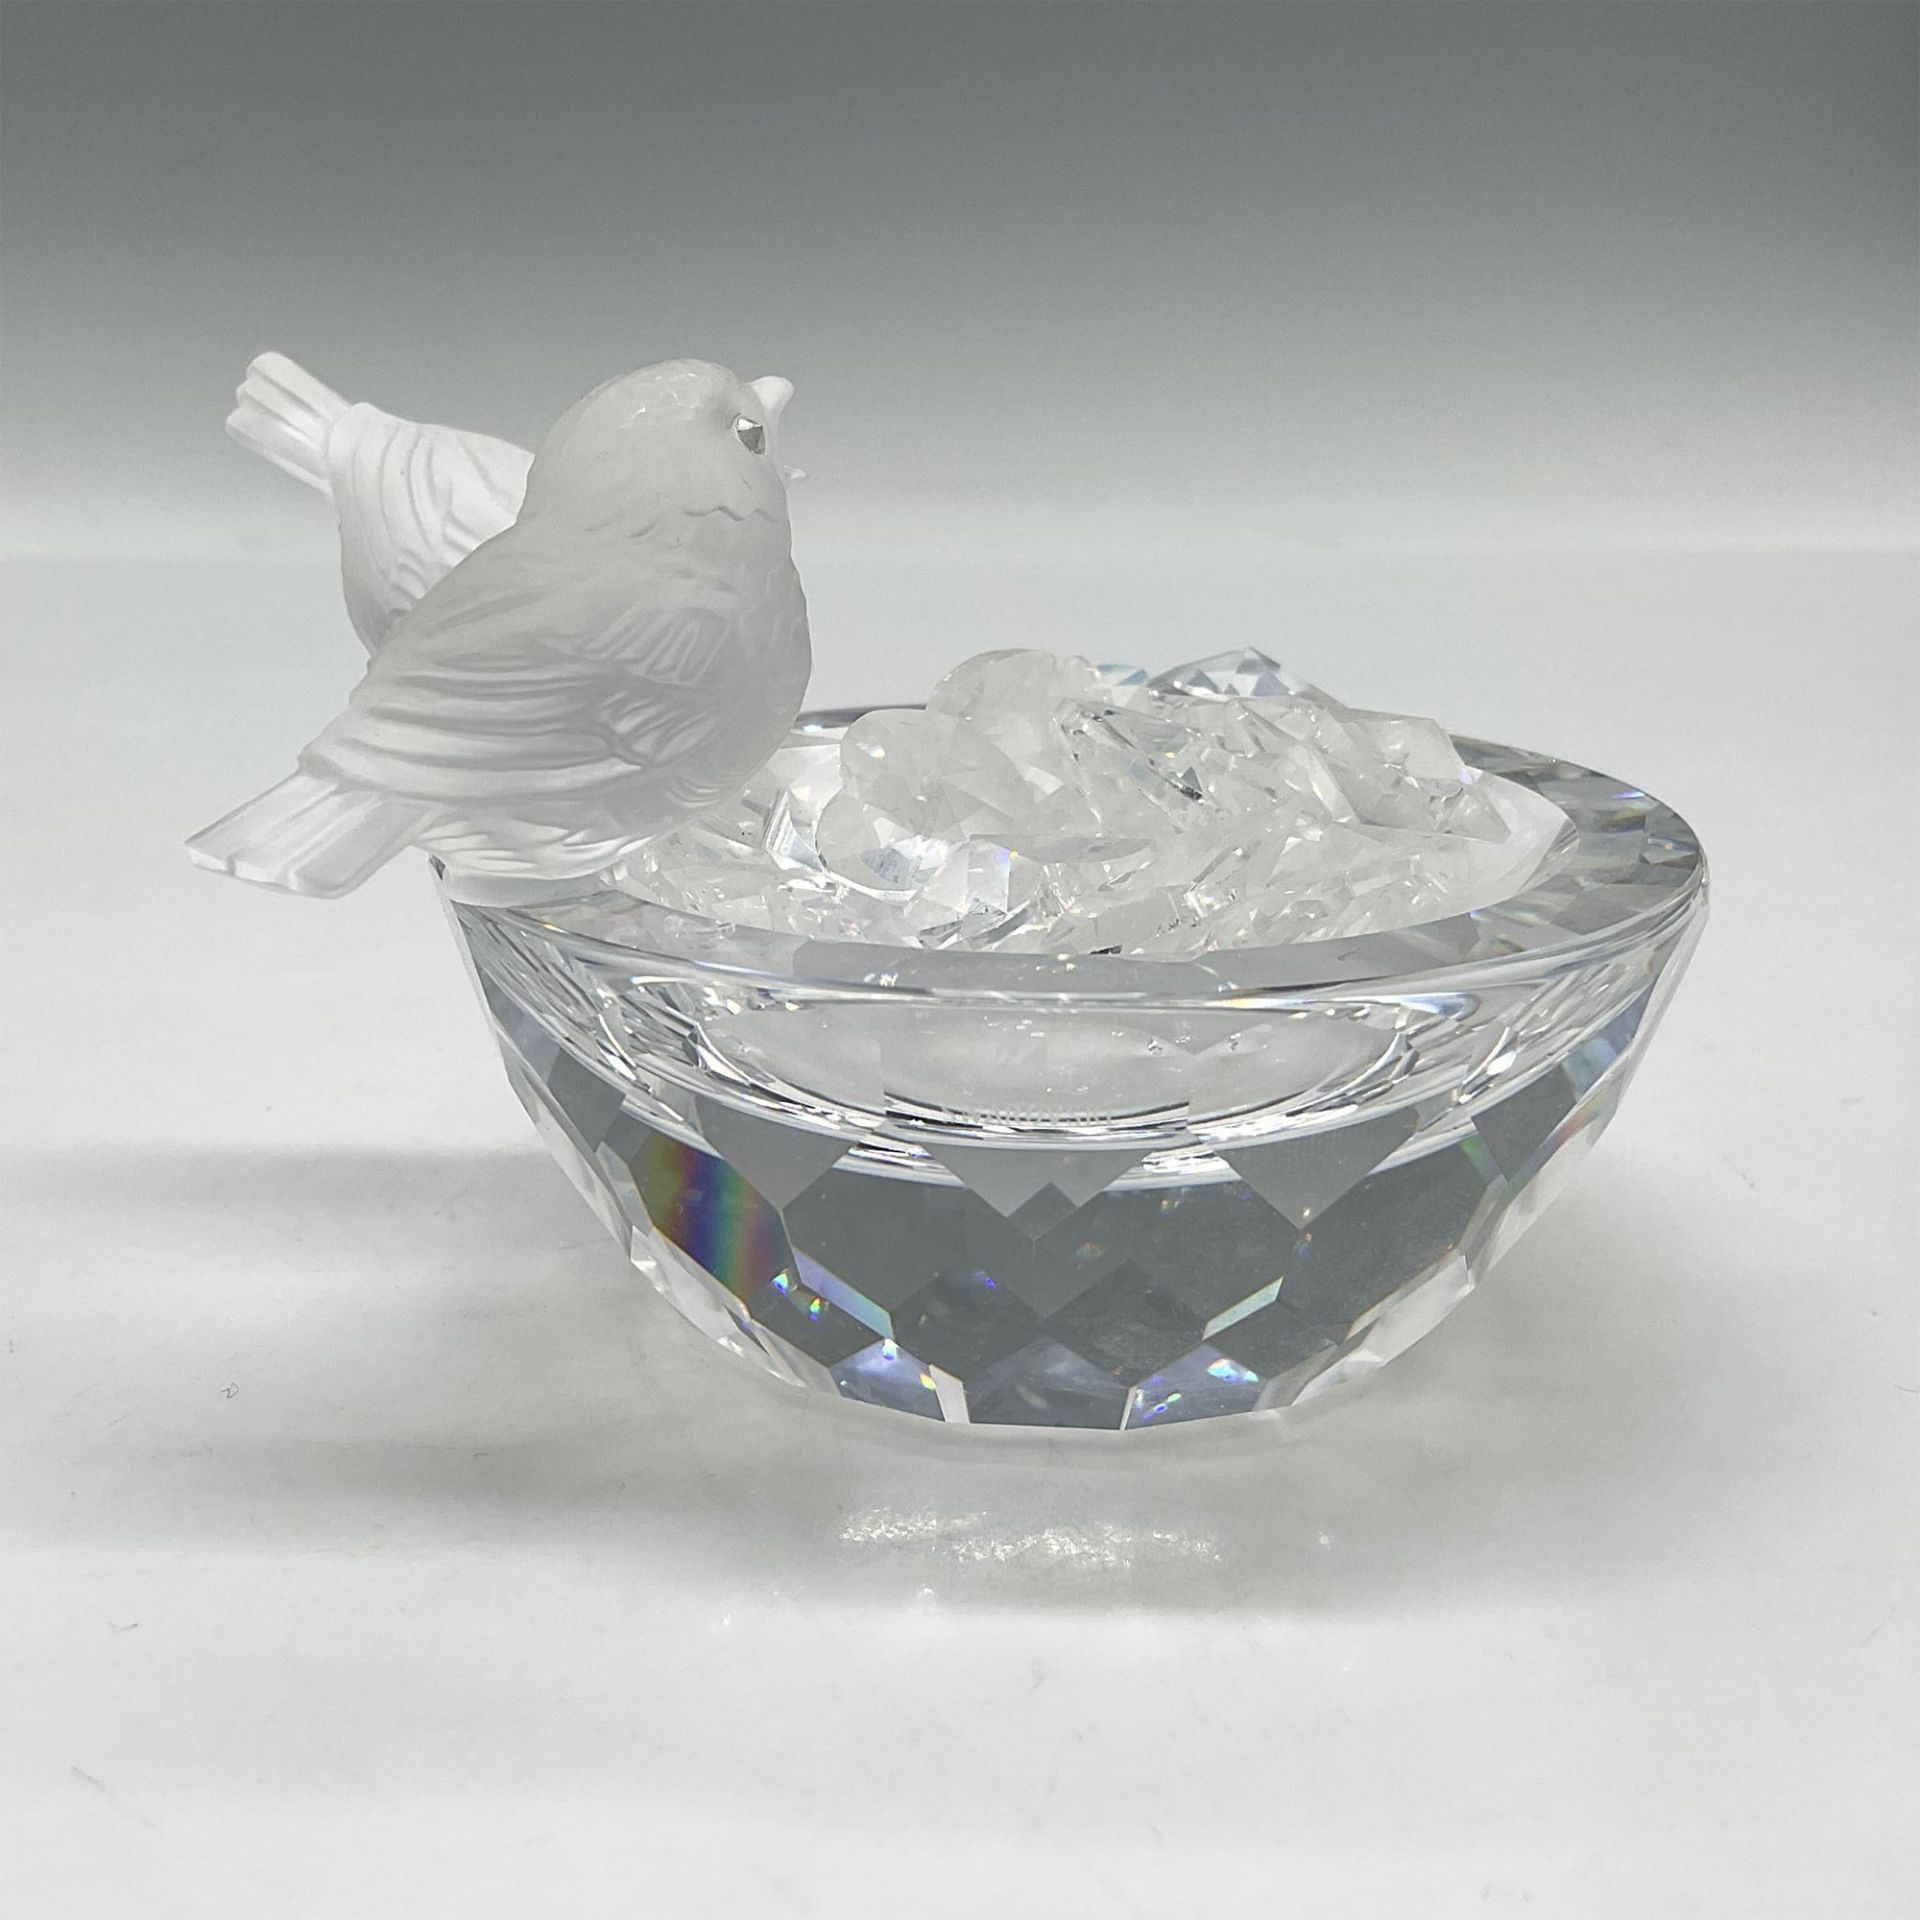 Swarovski Crystal Figurine, Bird Bath with Crystals - Image 4 of 4